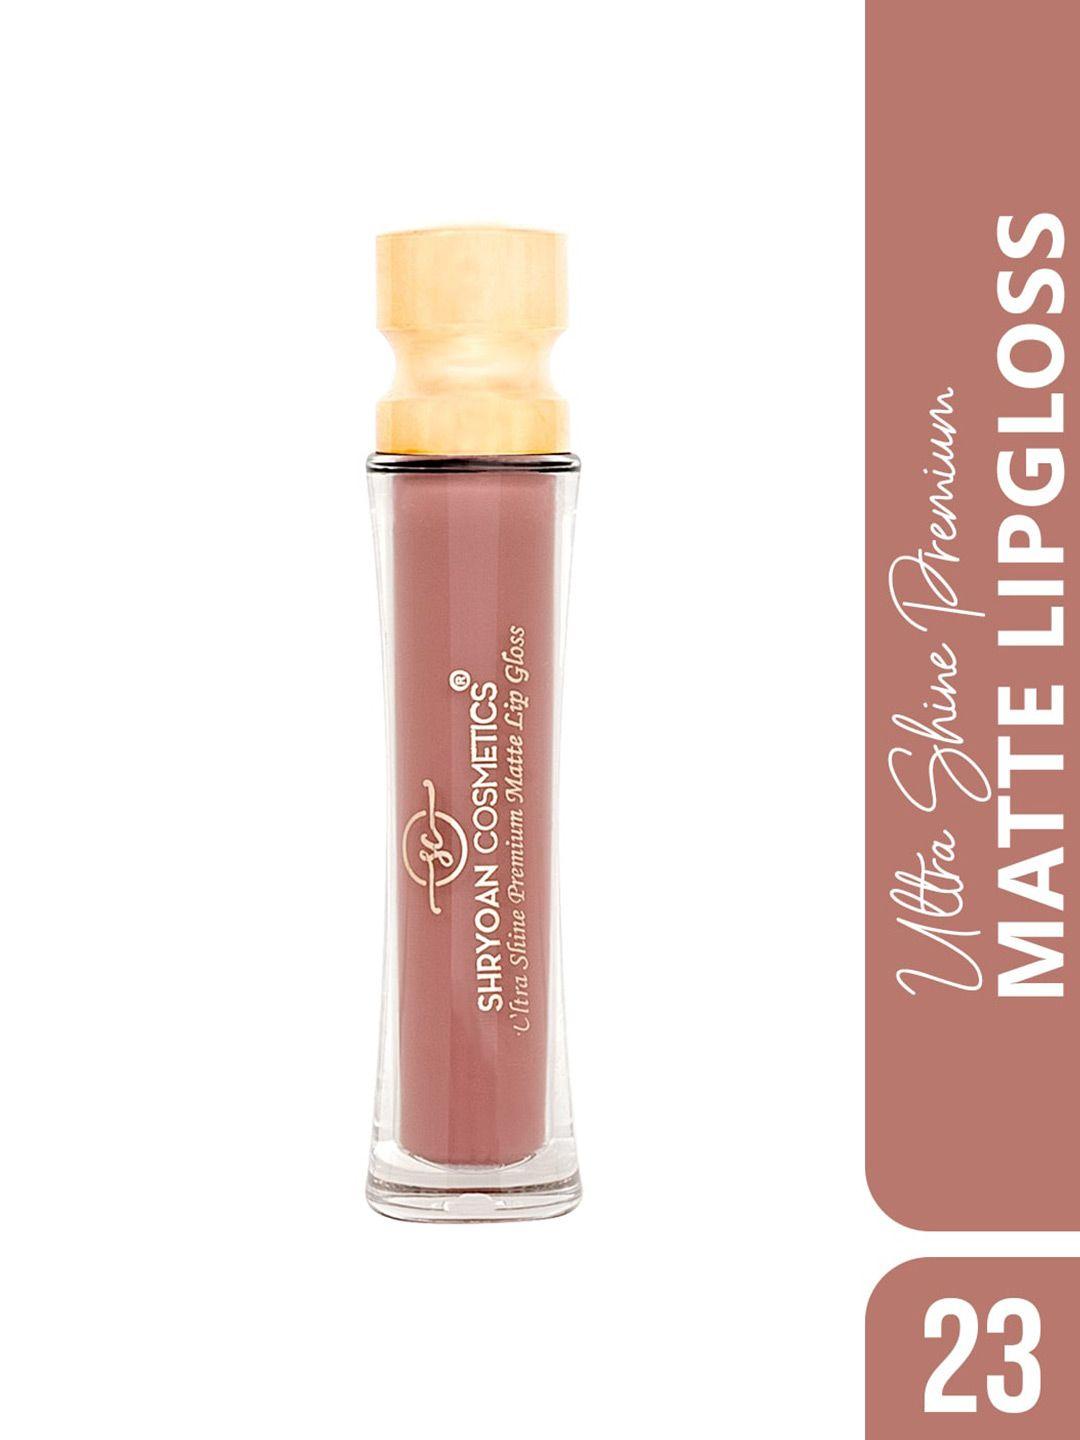 shryoan ultra shine premium matte long lasting lip gloss - sh23